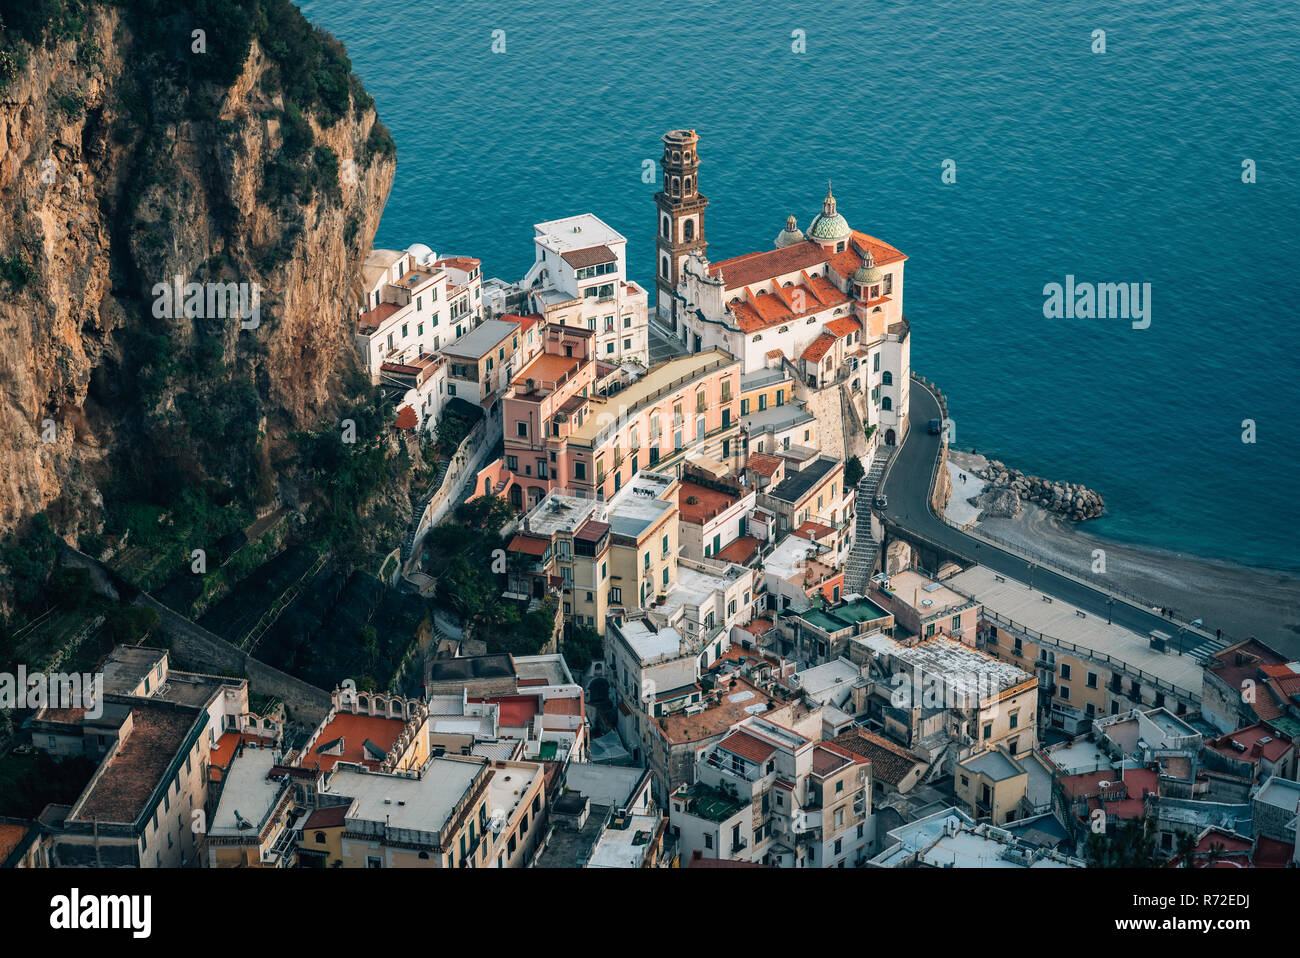 View of Atrani, on the Amalfi Coast, in Campania, Italy Stock Photo